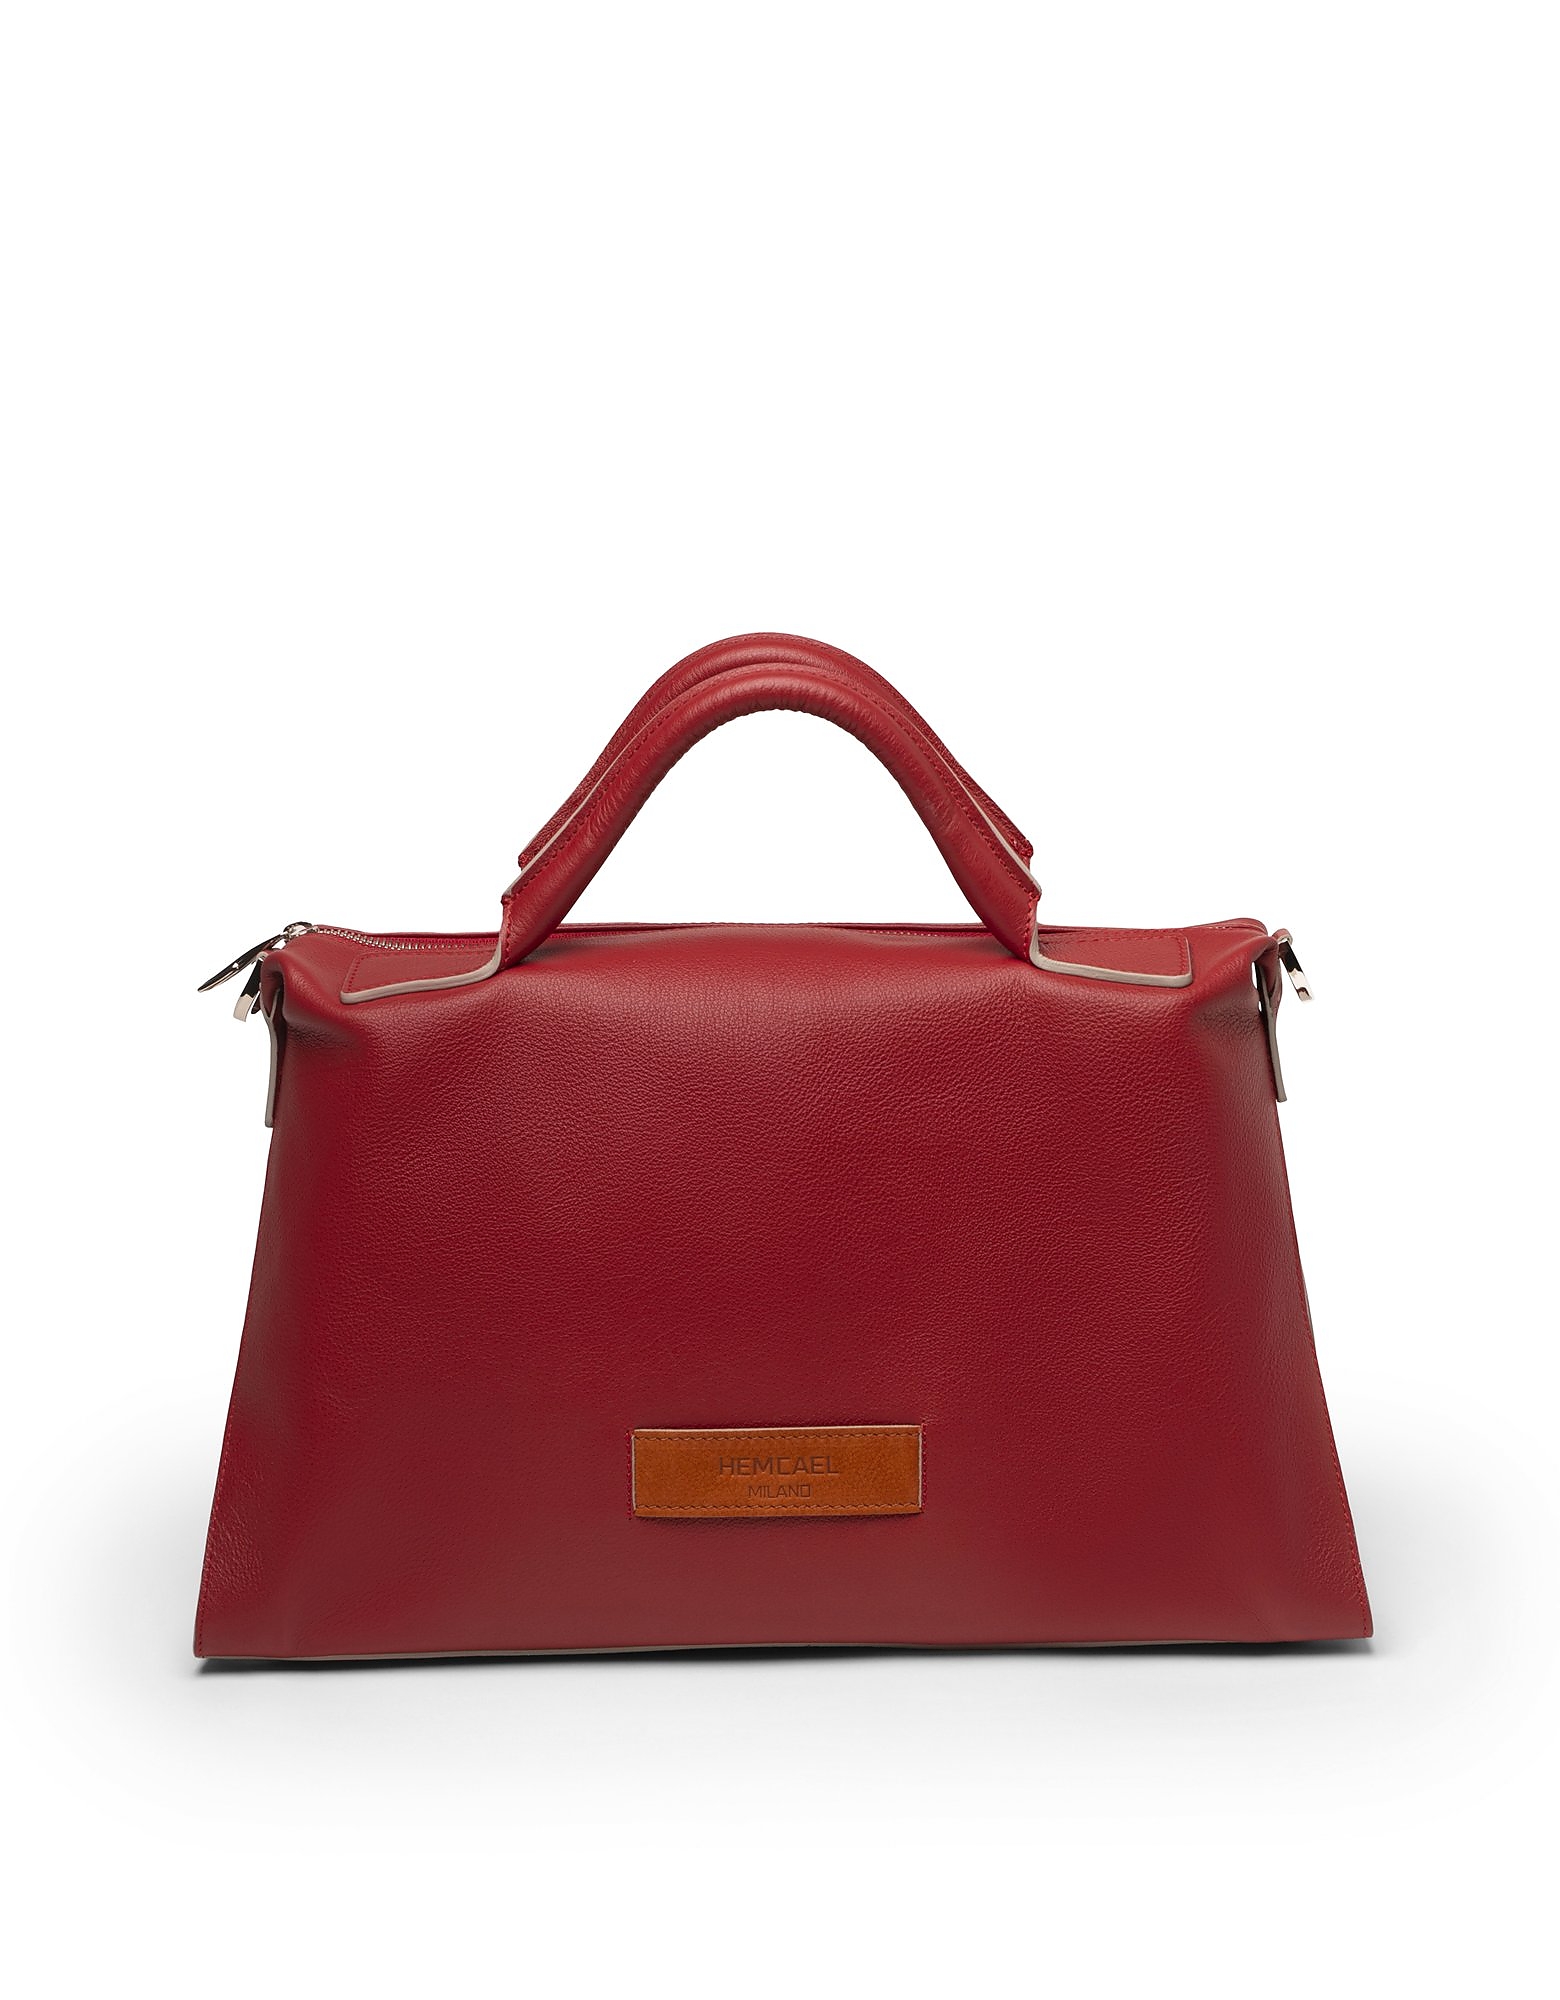 Hemcael Designer Handbags Dora Leather Top Handle Bag In Bordeaux